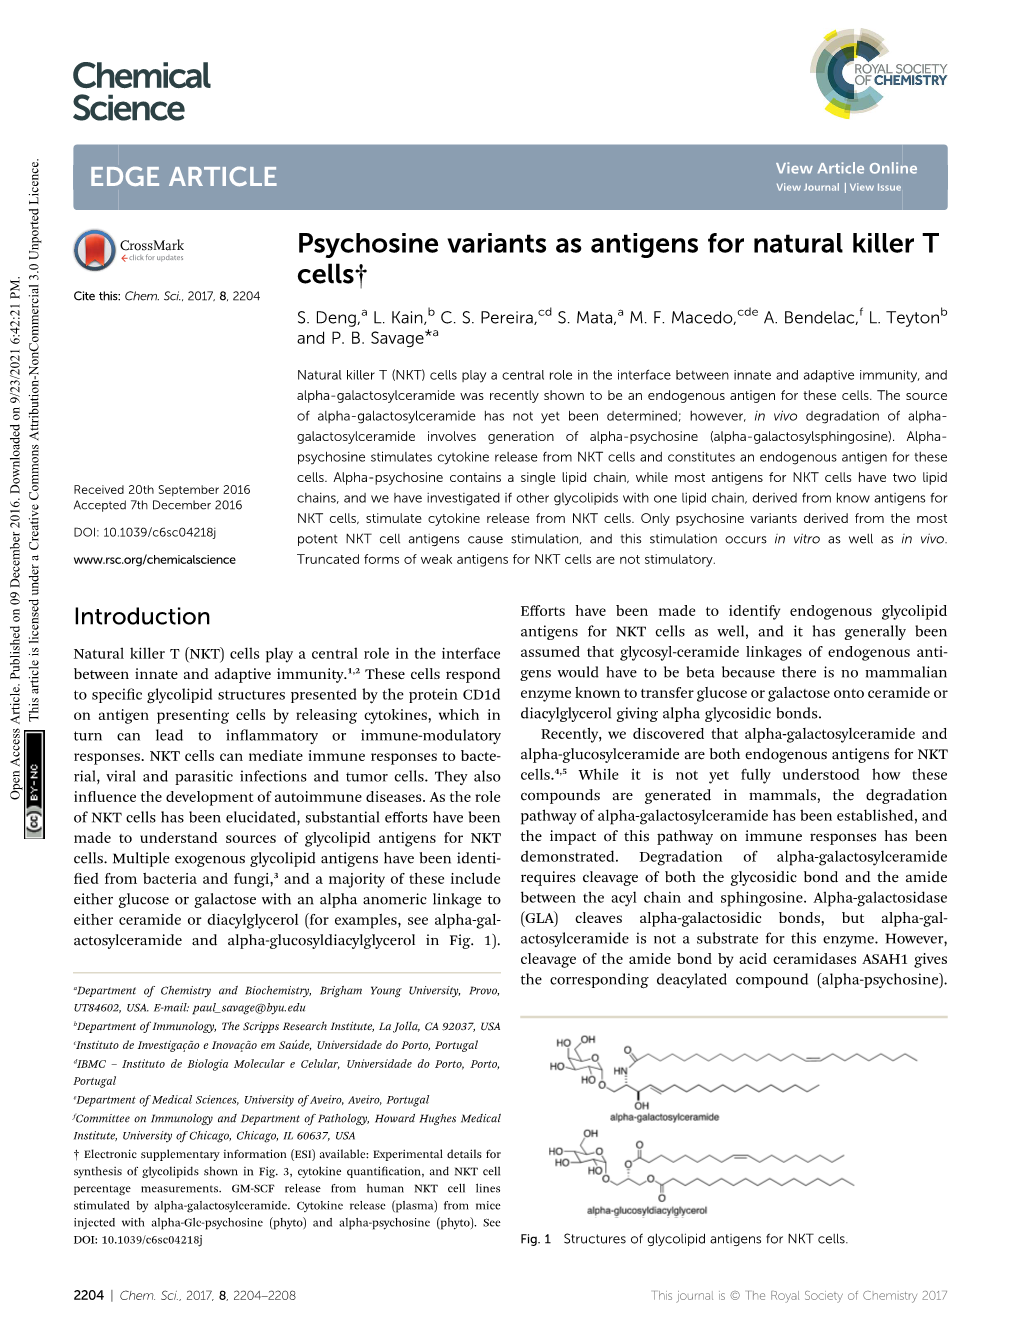 Psychosine Variants As Antigens for Natural Killer T Cells† Cite This: Chem